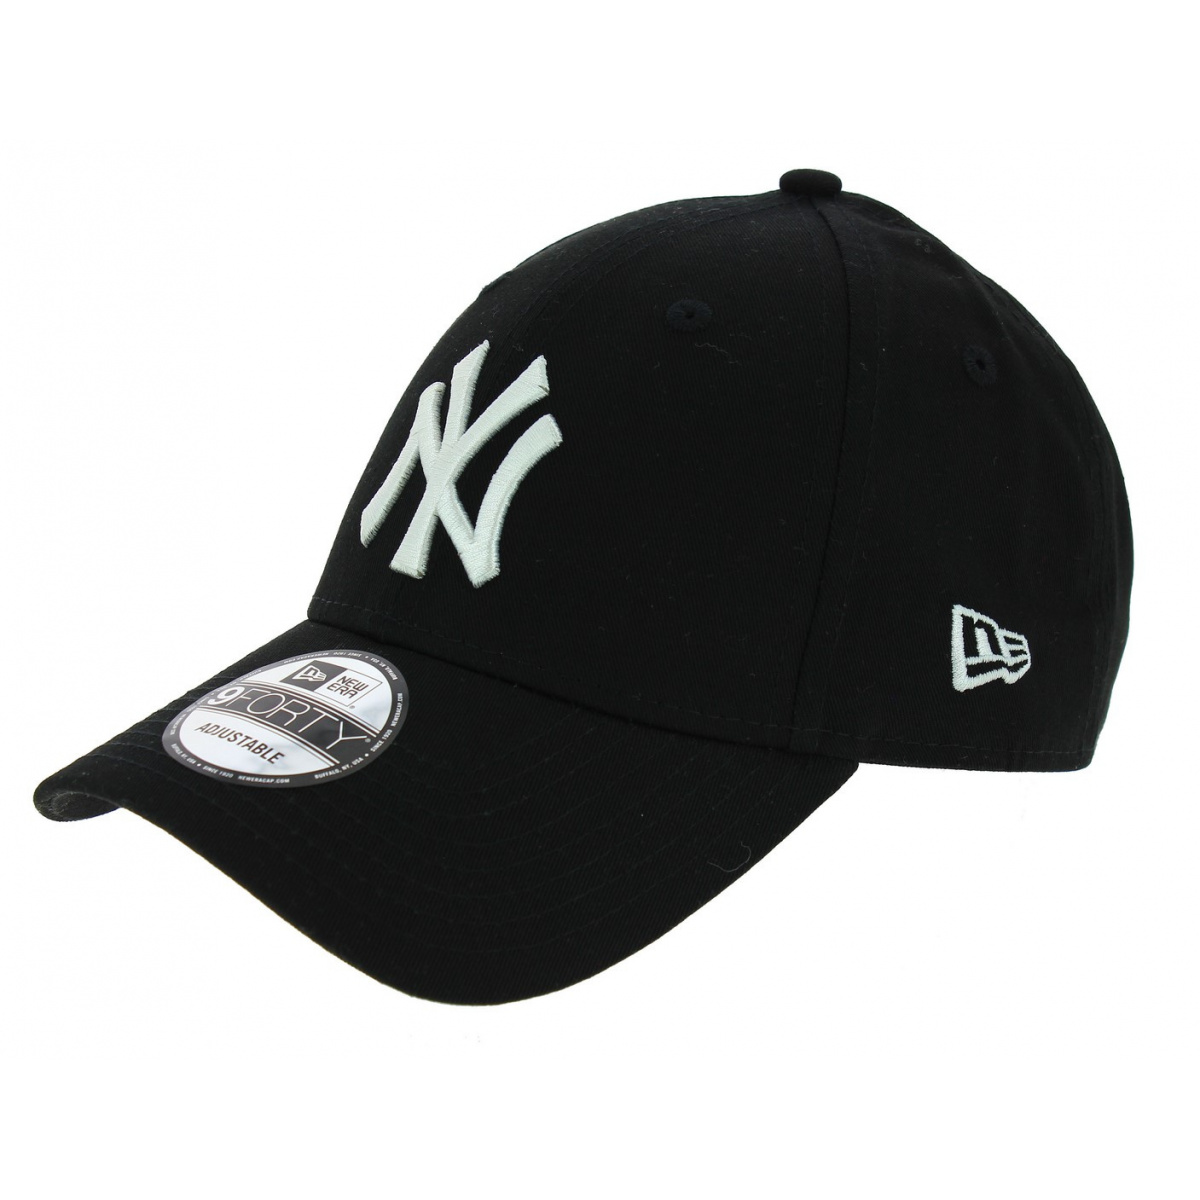 New Era MLB NY unisex flight bag in black